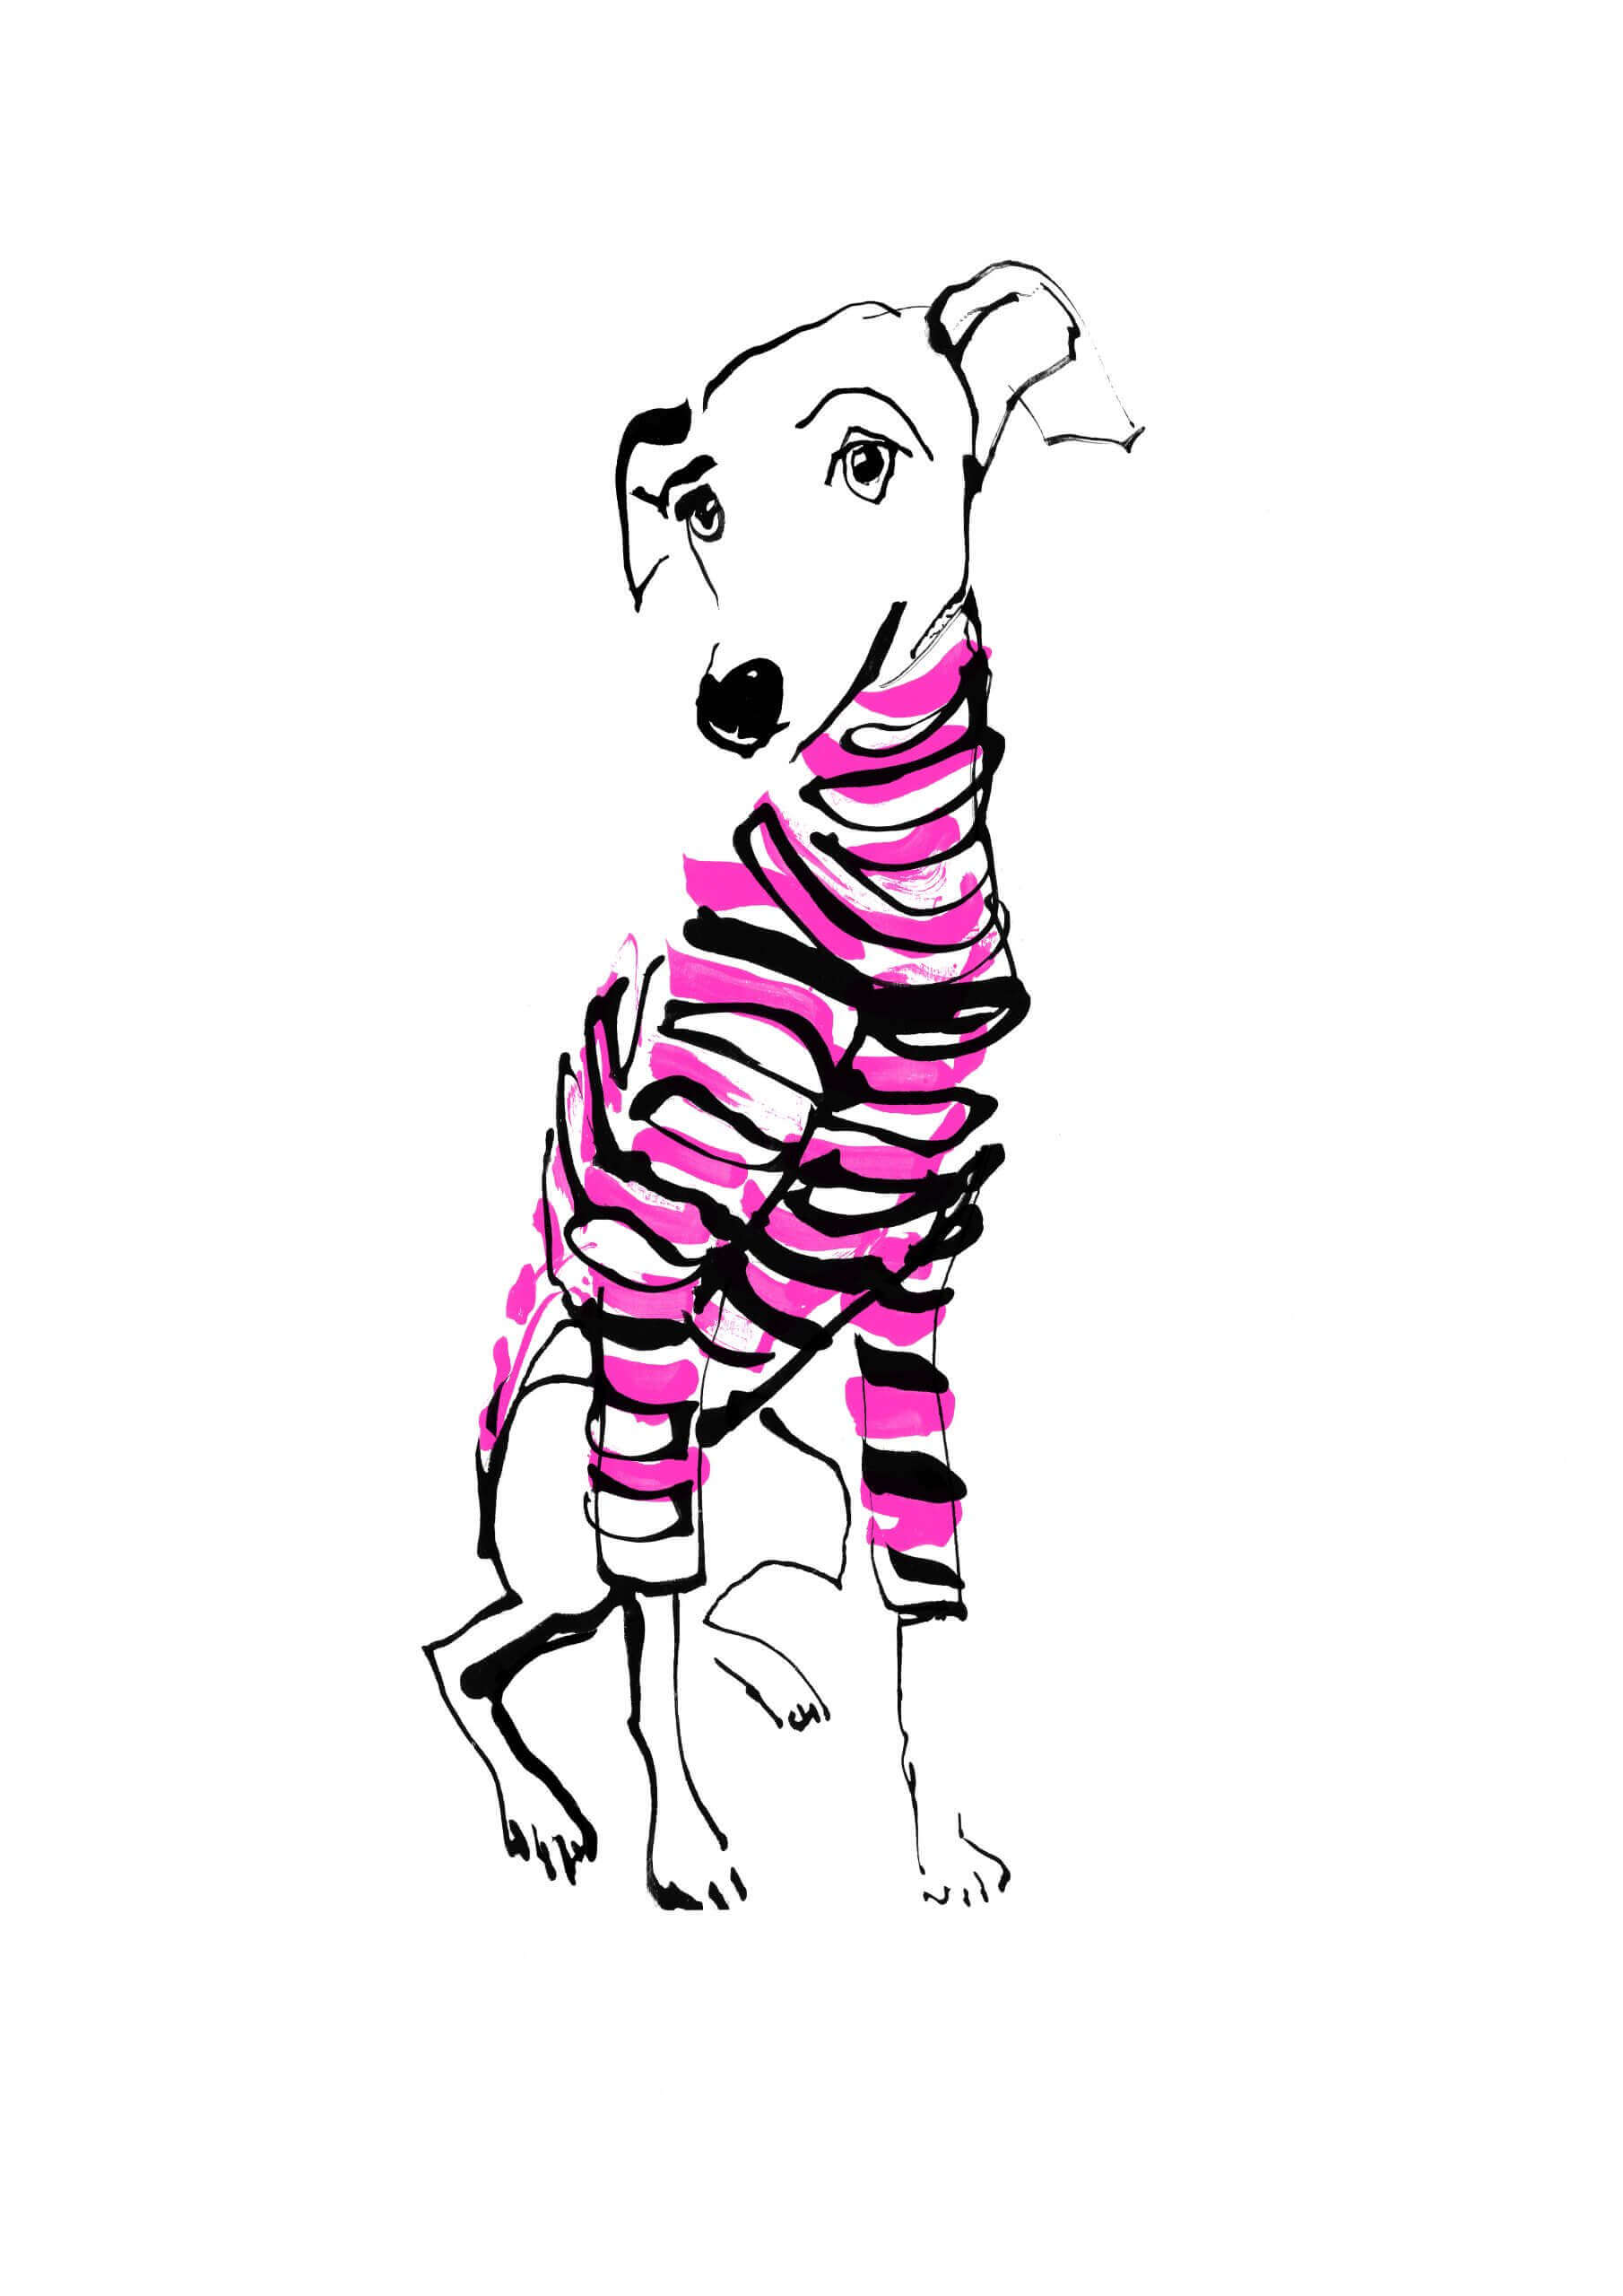 Illustration of a italian greyhound. Simple linear illustration of a dog. Black line drawing of a dog. Fashion illustration style illustration. Drawing a Basset hound. Ink style line drawing.